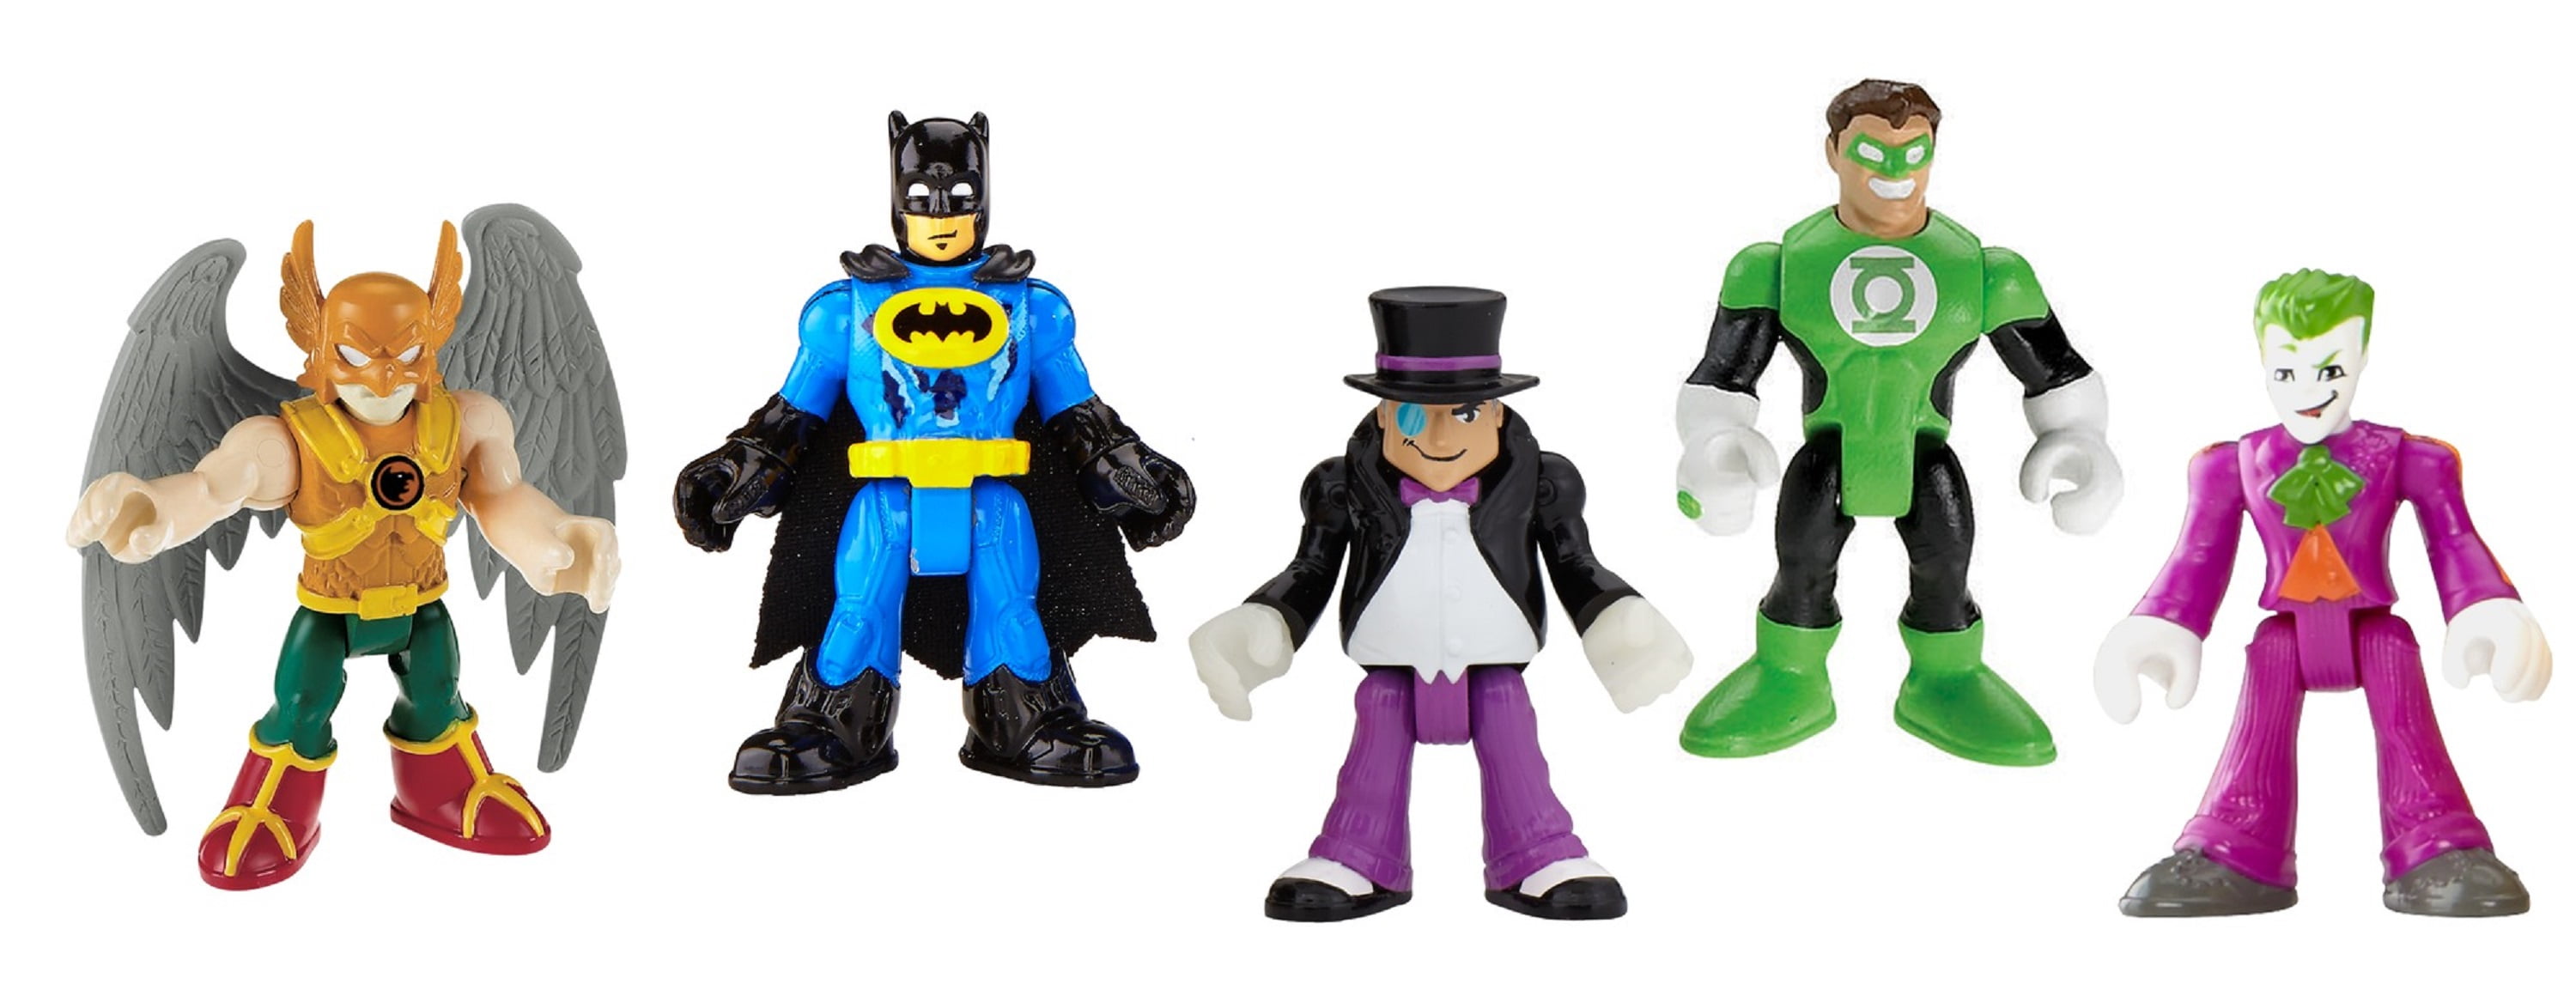 Rare fish-price Imaginext DC Super Friends Figure Batman Comics hero toys 